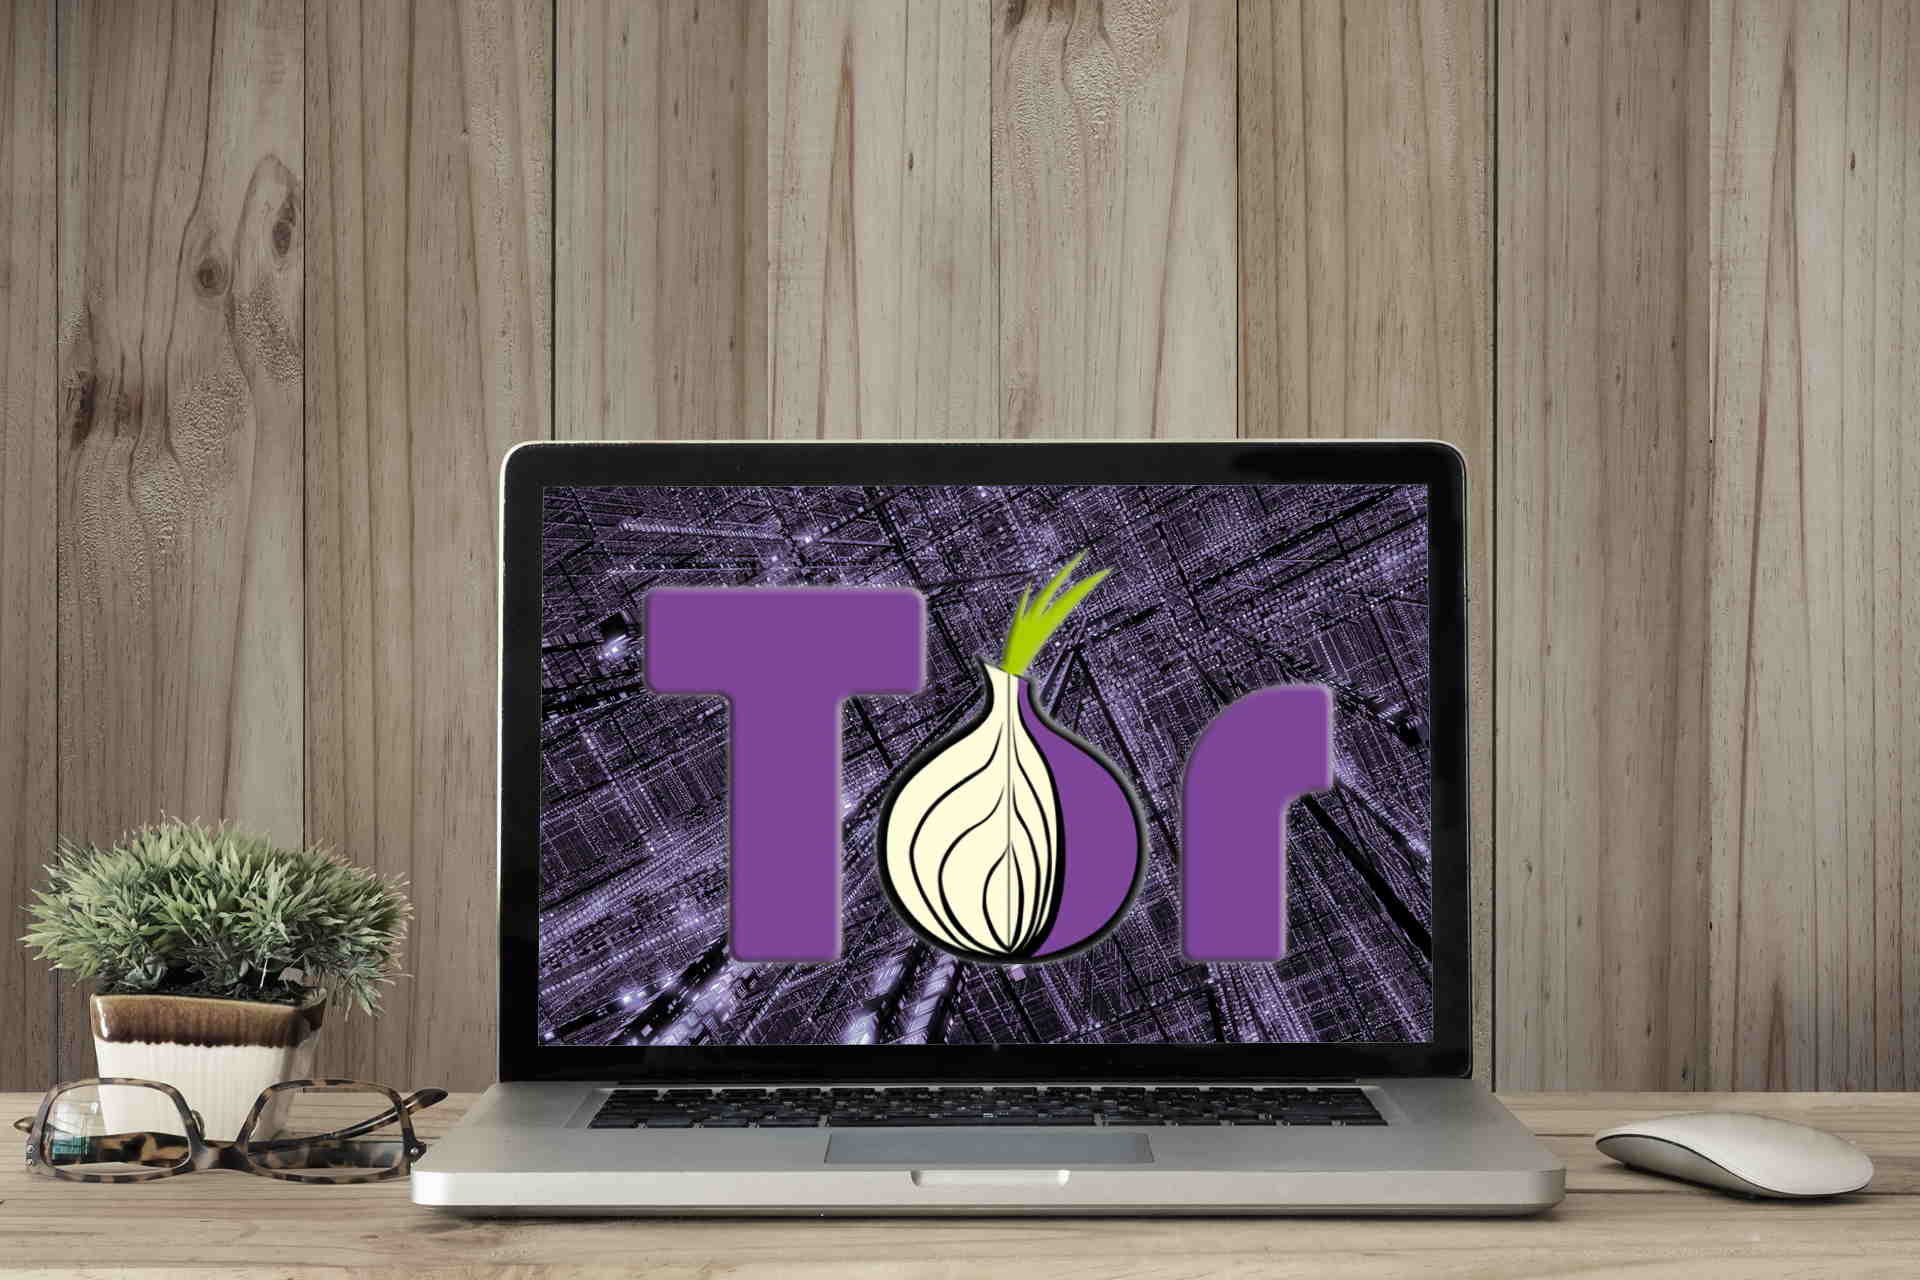 Tor browser is already running but is not responding hudra настроить прокси в тор браузере hydra